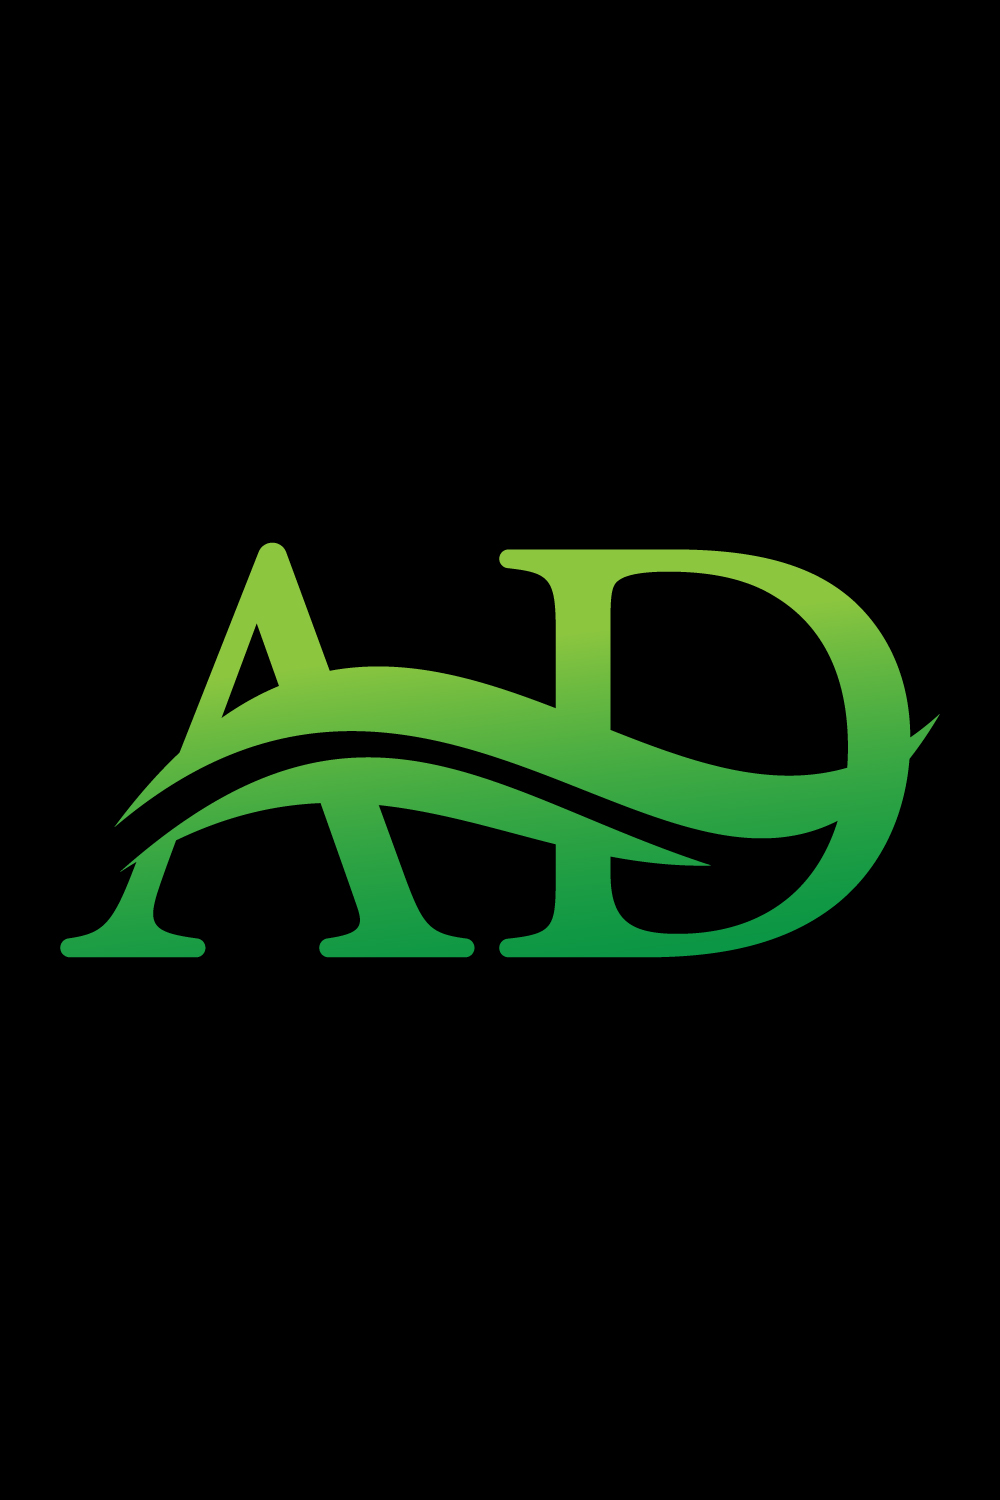 Initial AD Letter logo design, Vector design concept pinterest preview image.